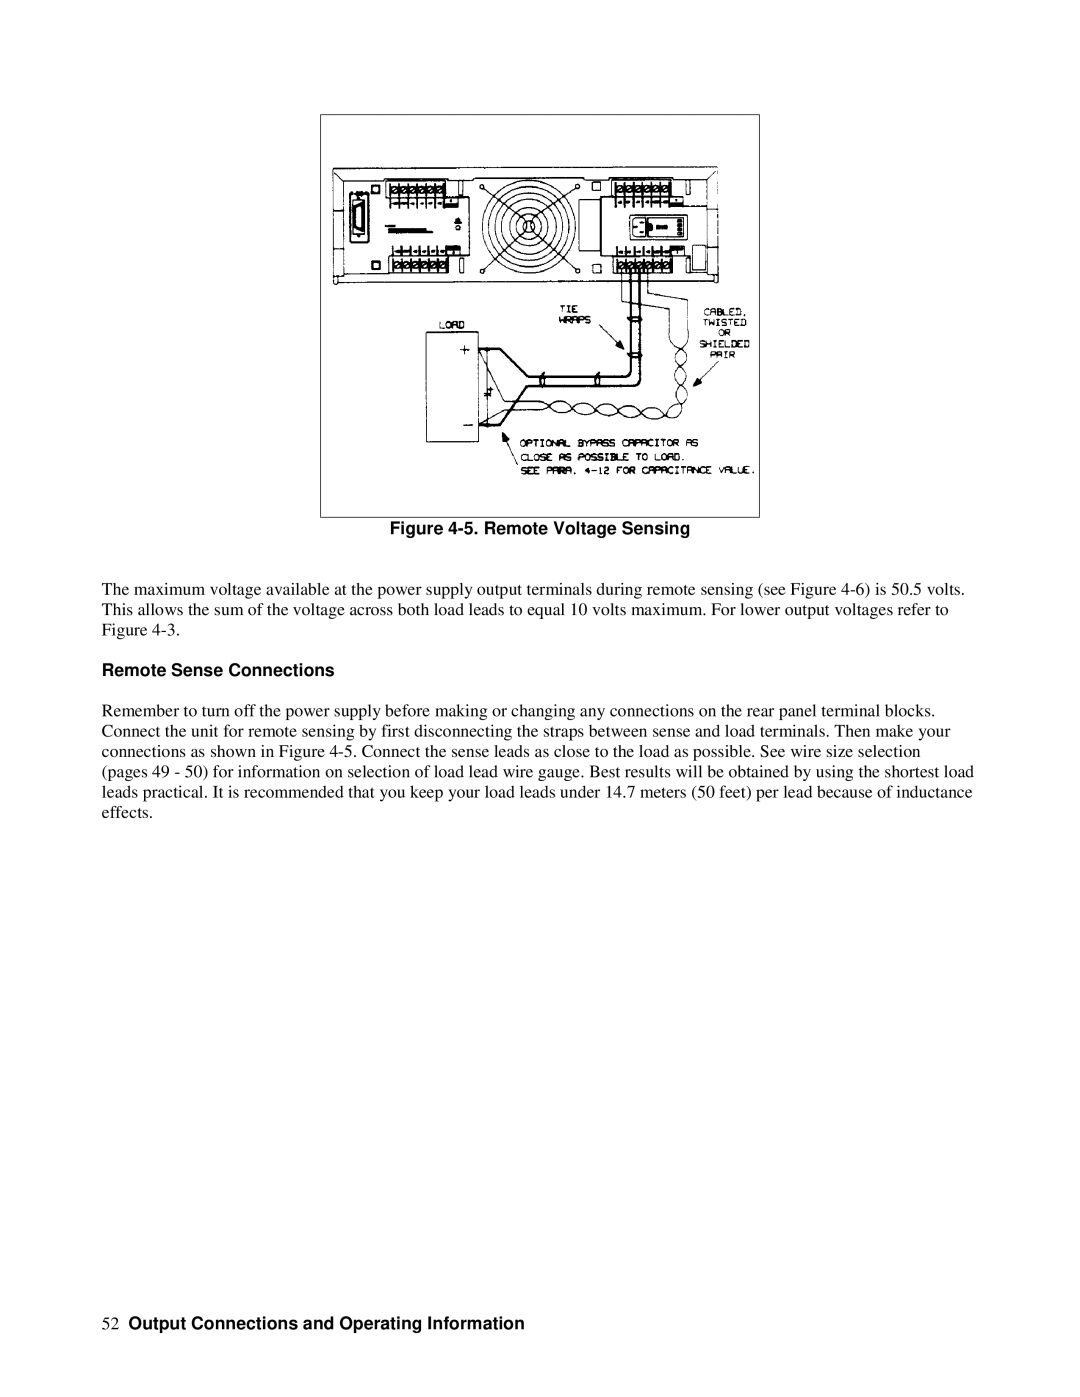 Agilent Technologies 6626A, 6628A, 6625A, 6629A manual Remote Voltage Sensing, Remote Sense Connections 